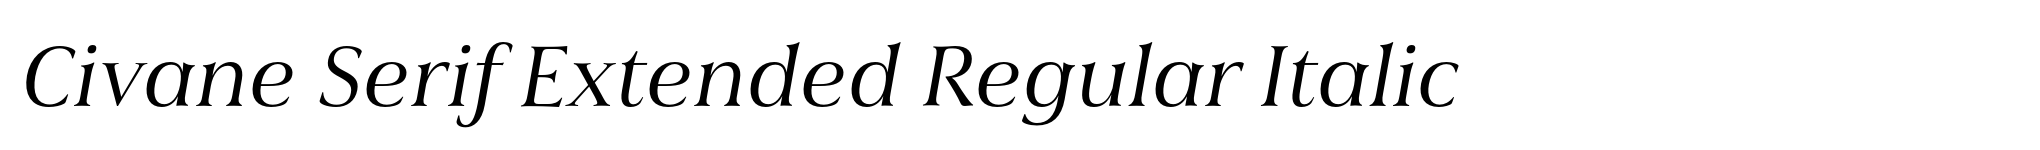 Civane Serif Extended Regular Italic image